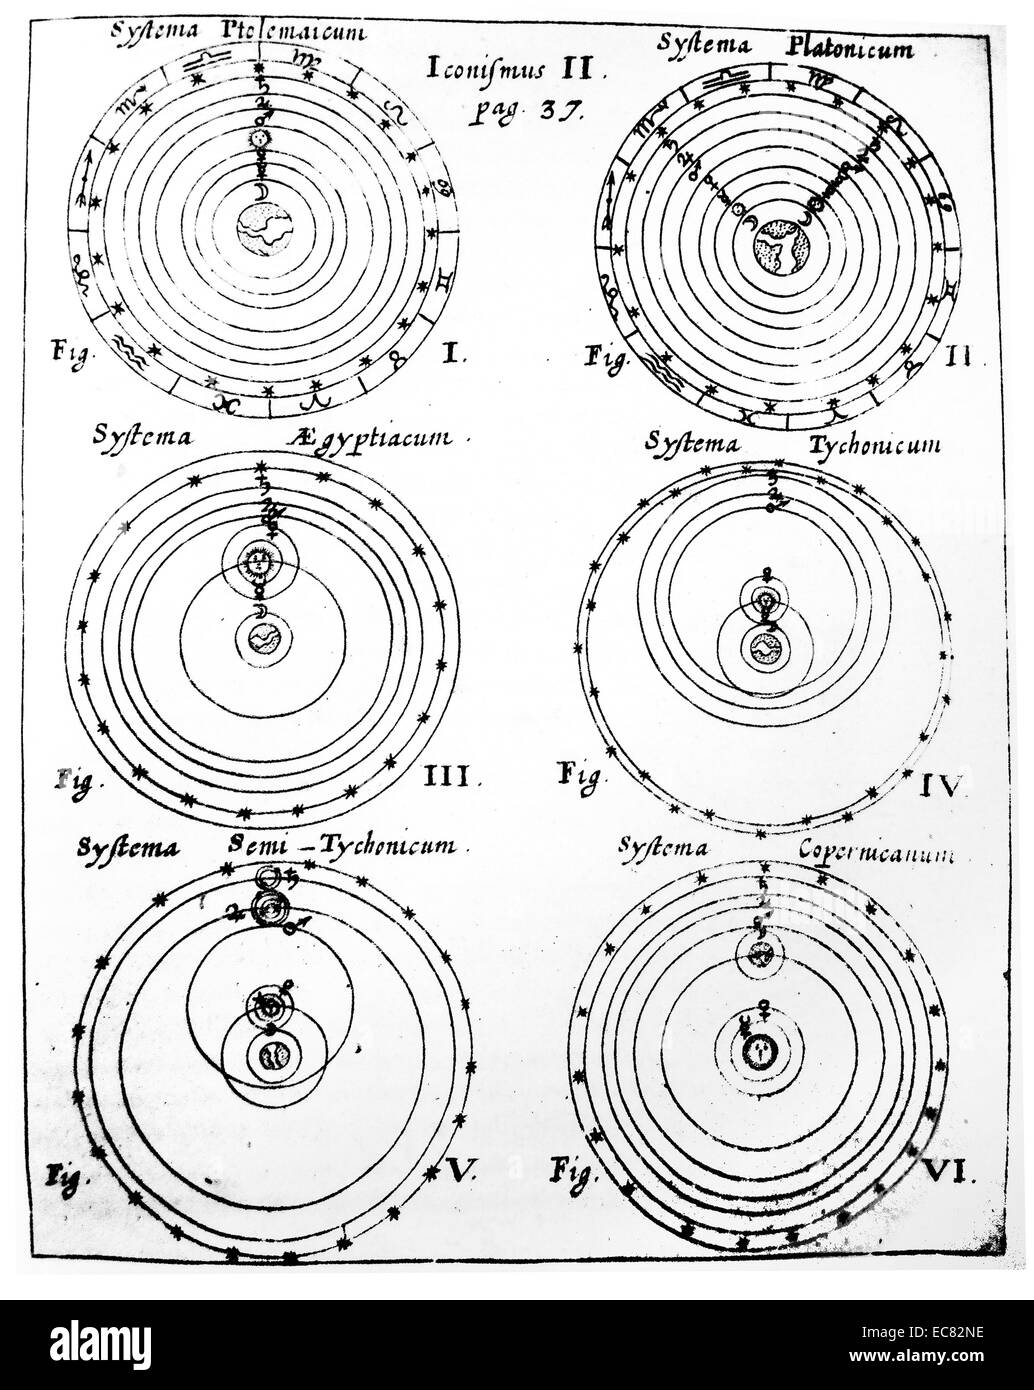 Iter extaticum: sistemi cosmica da Tolomeo a Copernico data 1671 da Athanasius Kircher Foto Stock